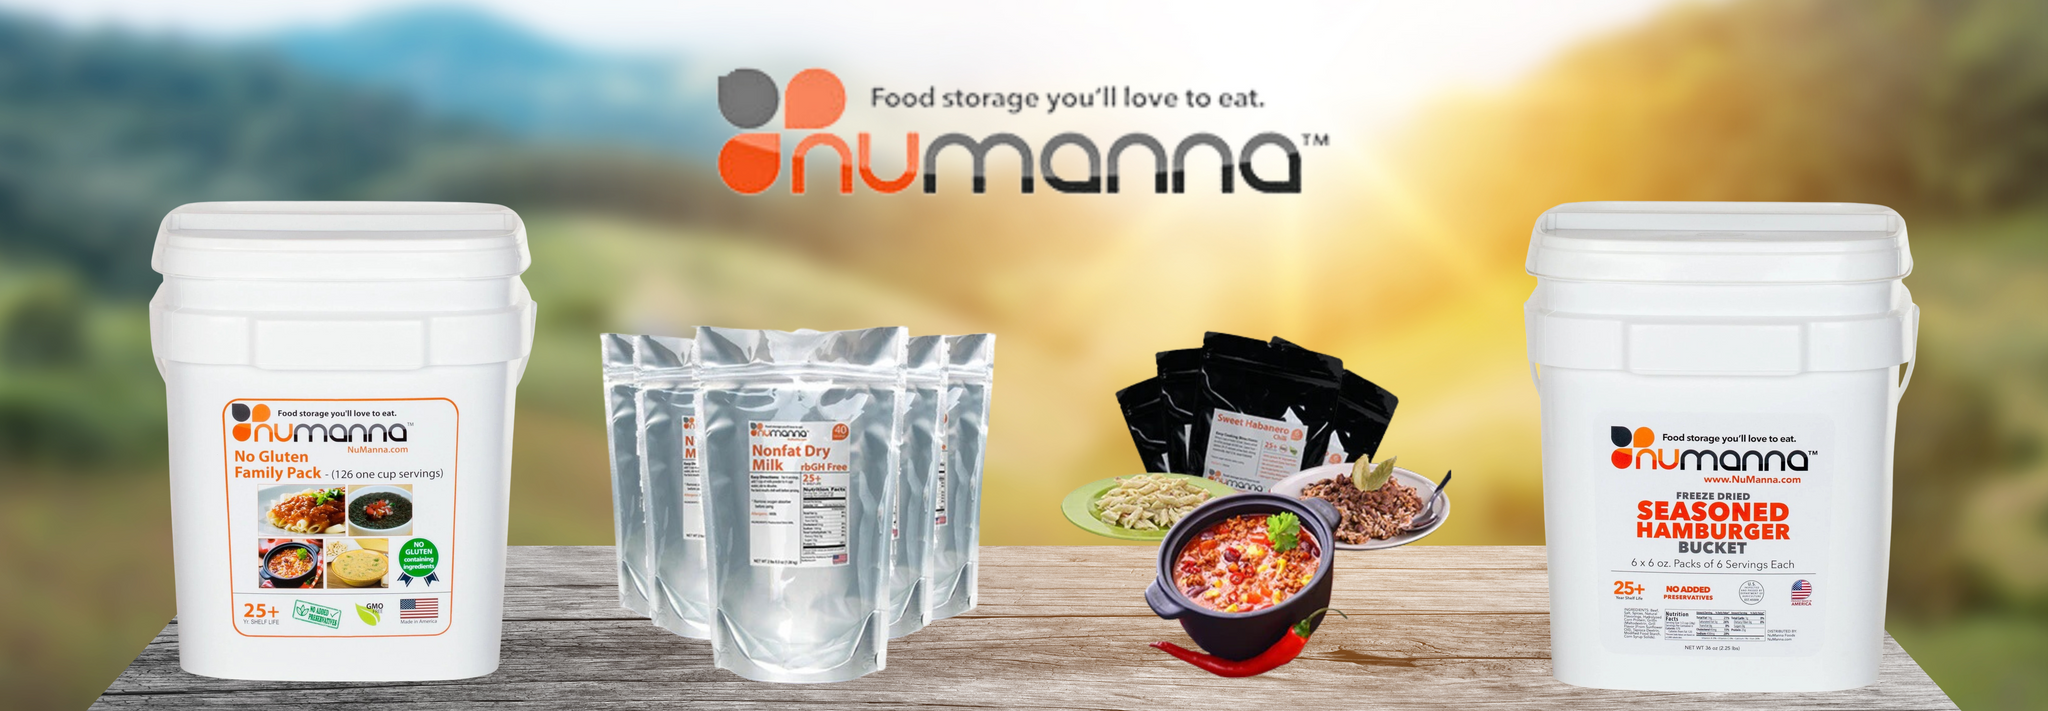 Numanna Emergency Food Storage